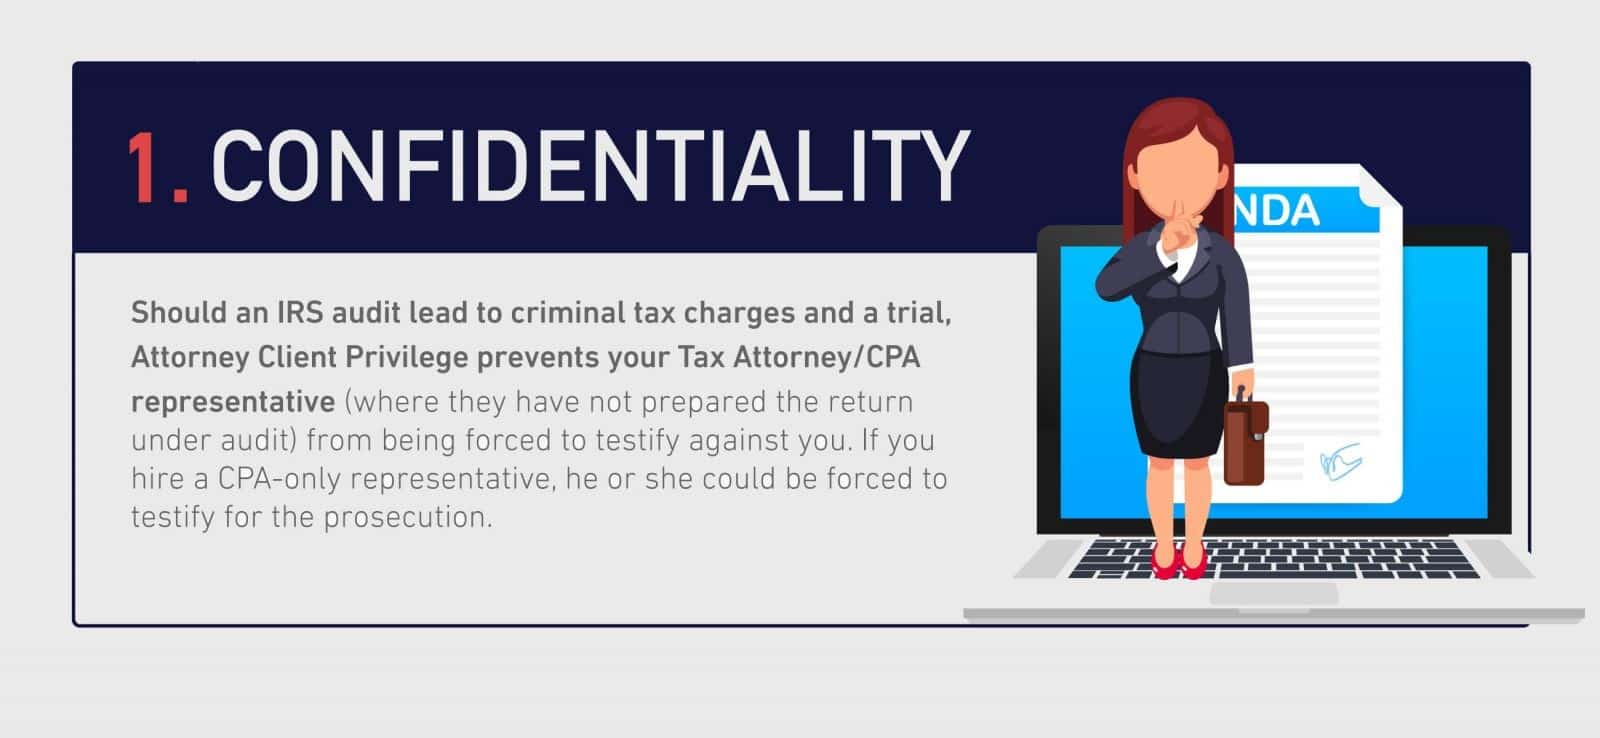 Confidentiality-klasing-associates-oxnard-tax-attorney